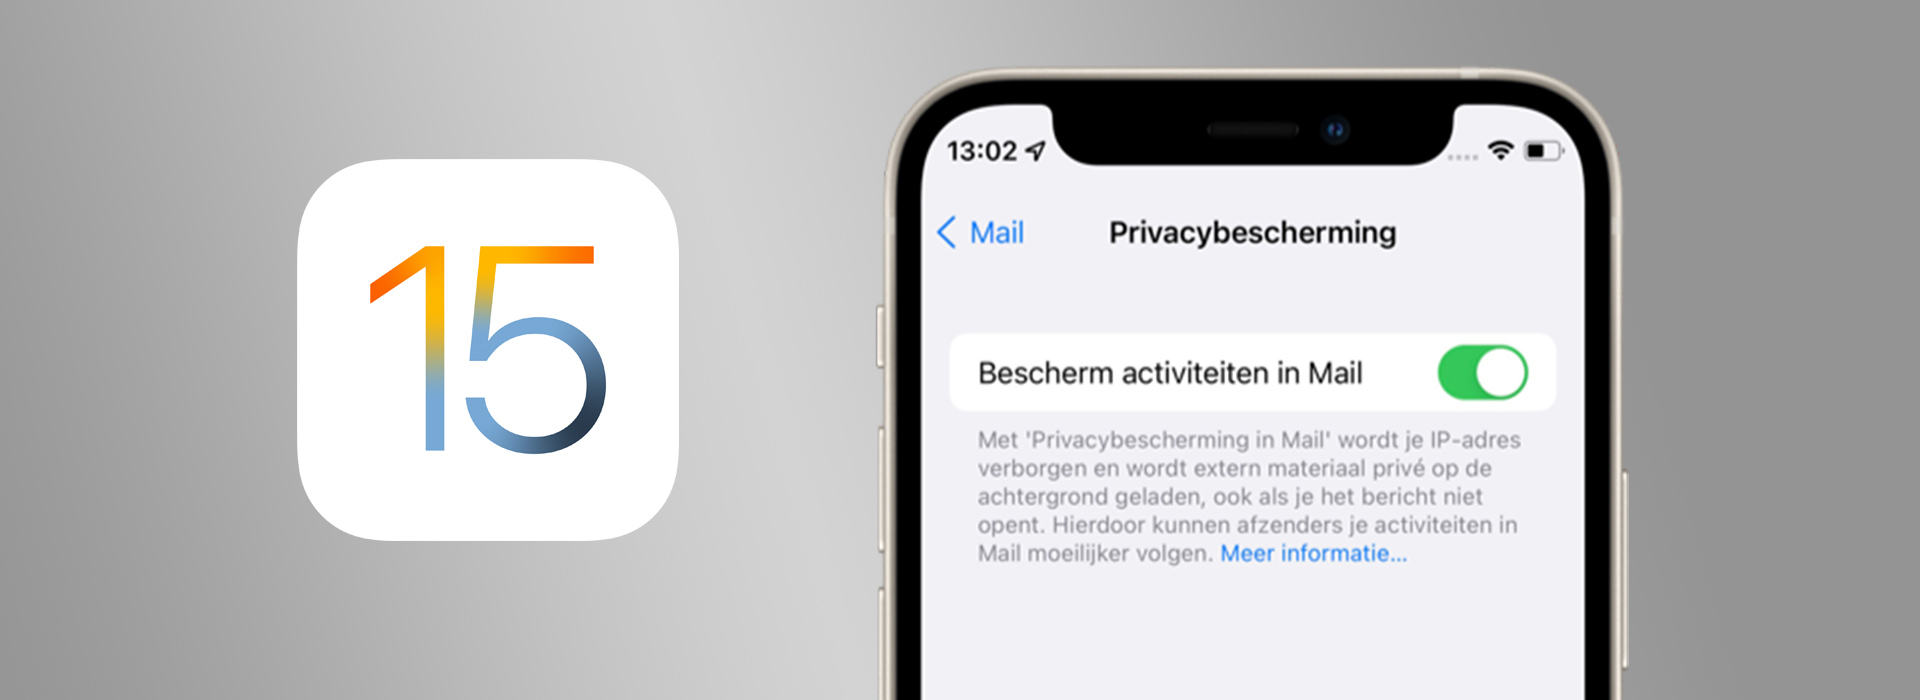 iOS 15: de privacy update